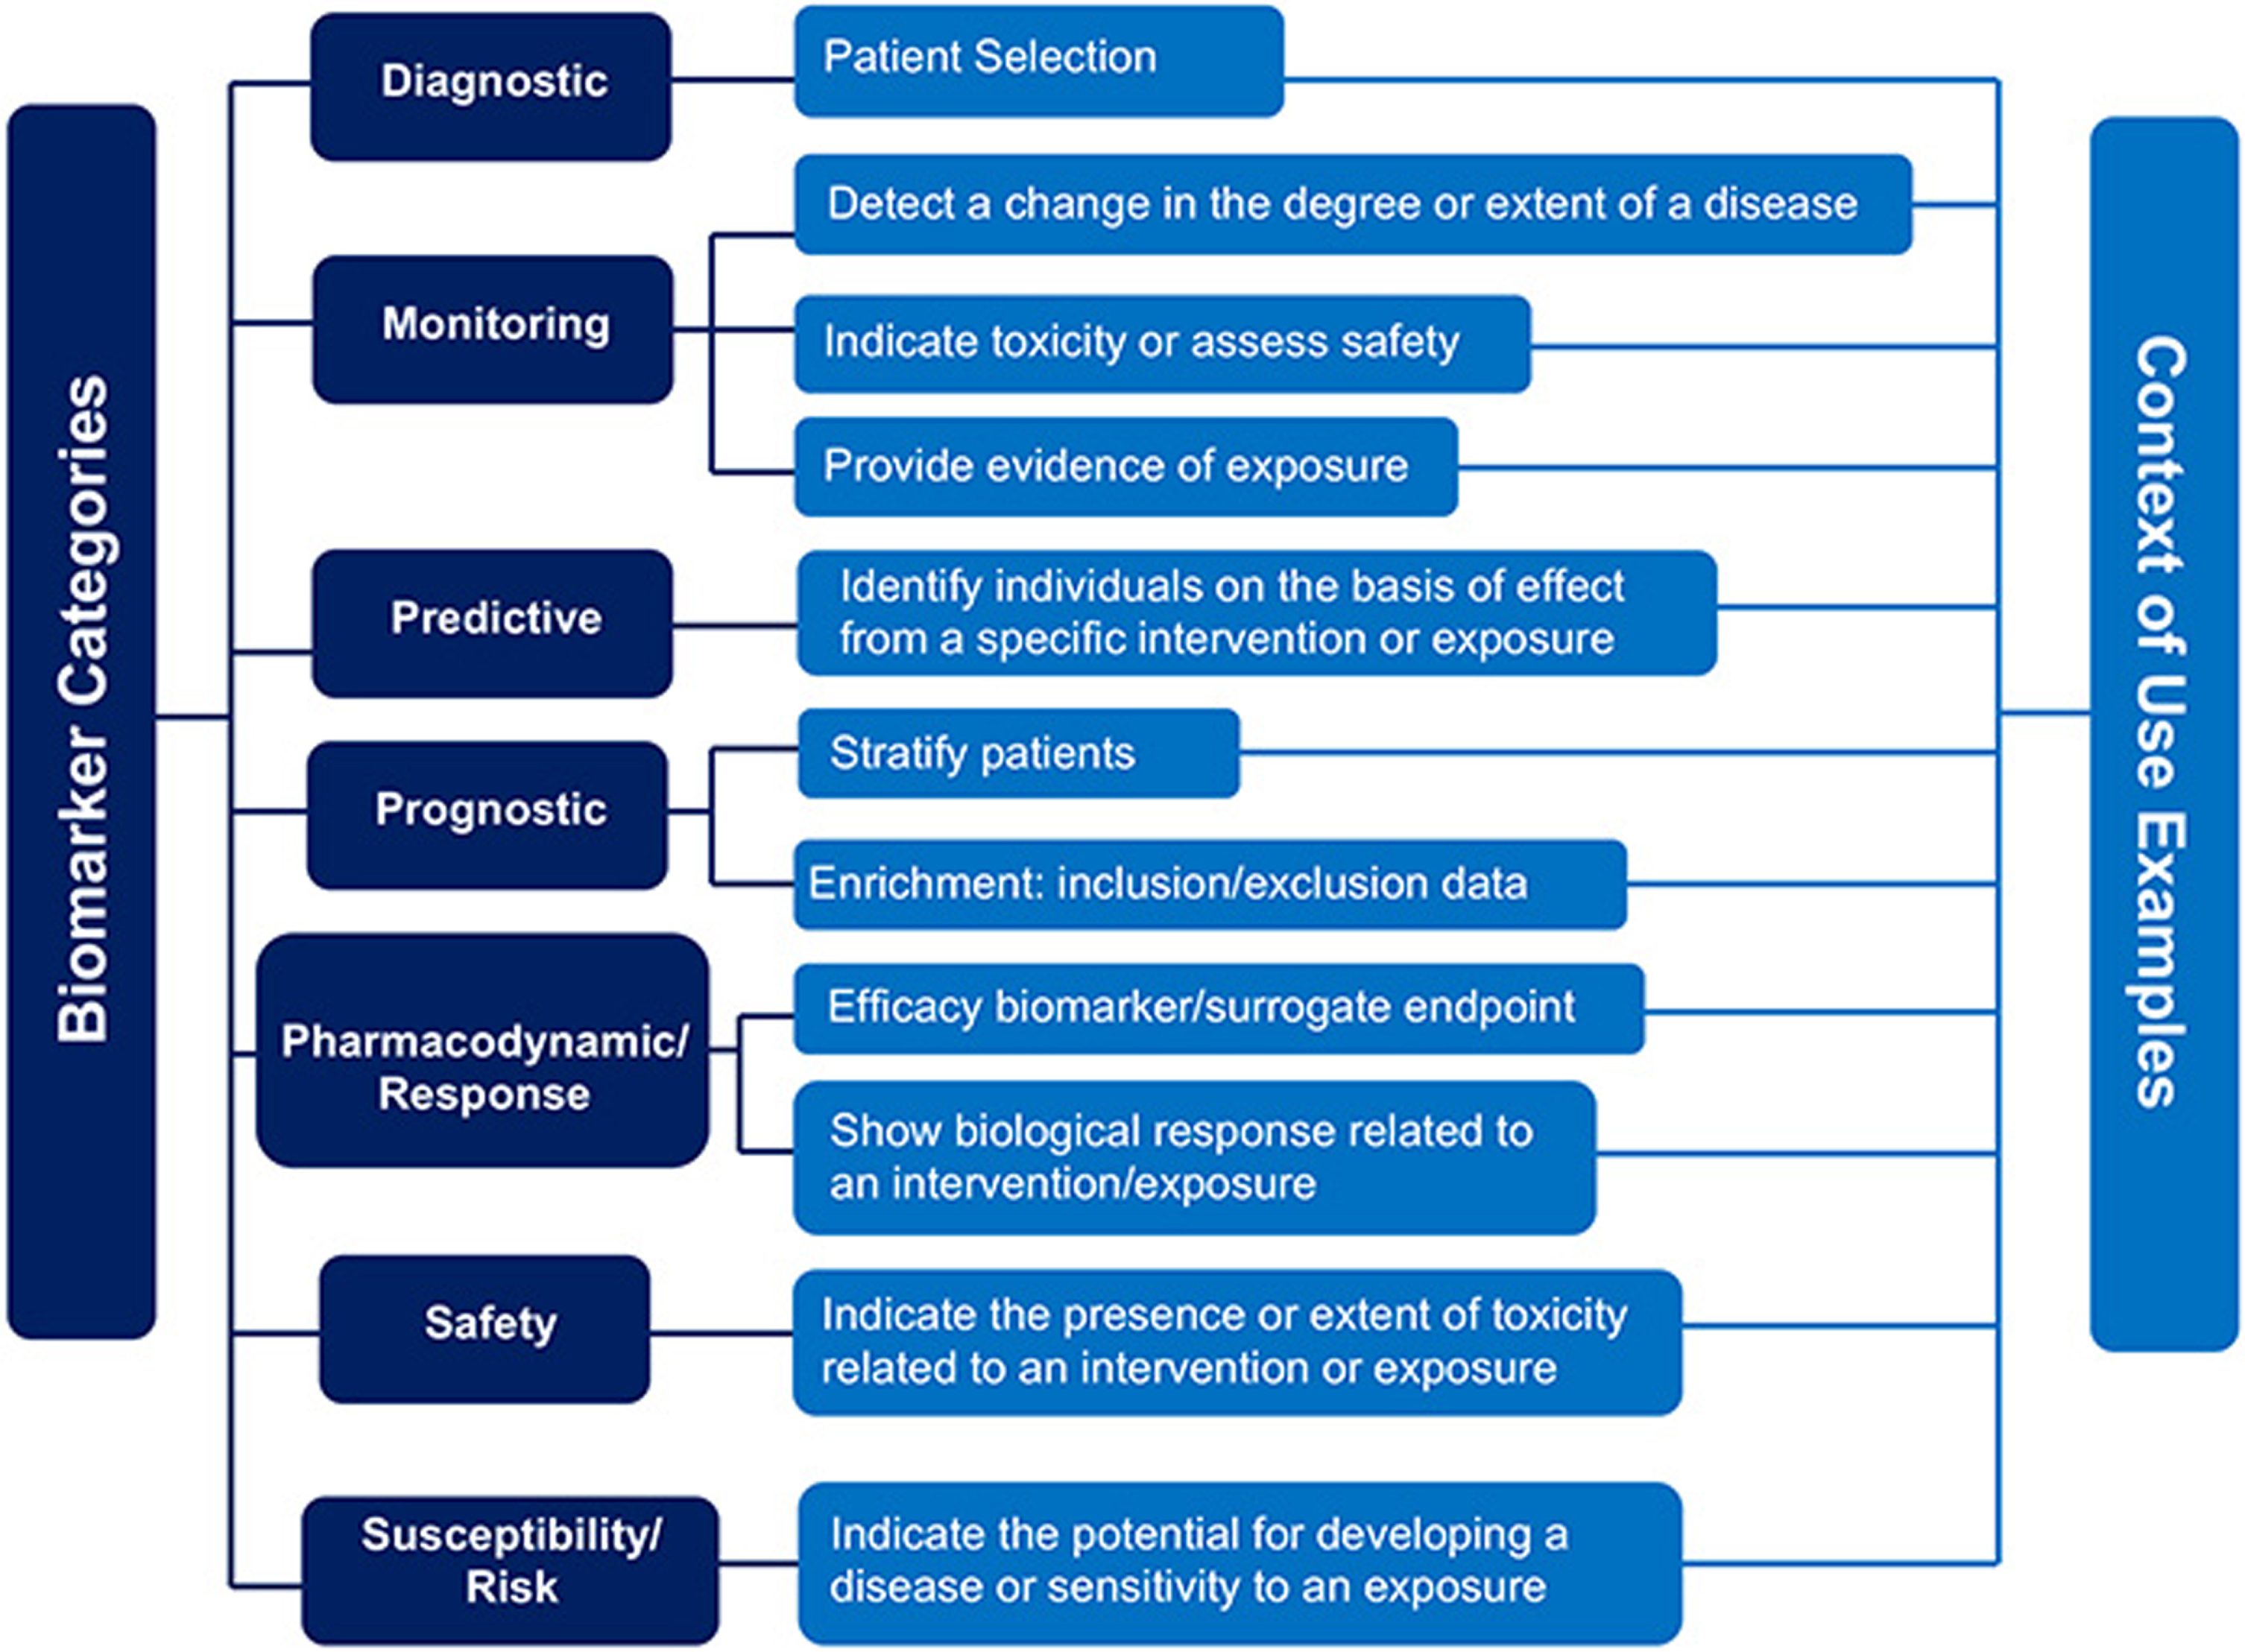 FDA Guidance on context of use (https://www.fda.gov/drugs/biomarker-qualification-program/context-use).